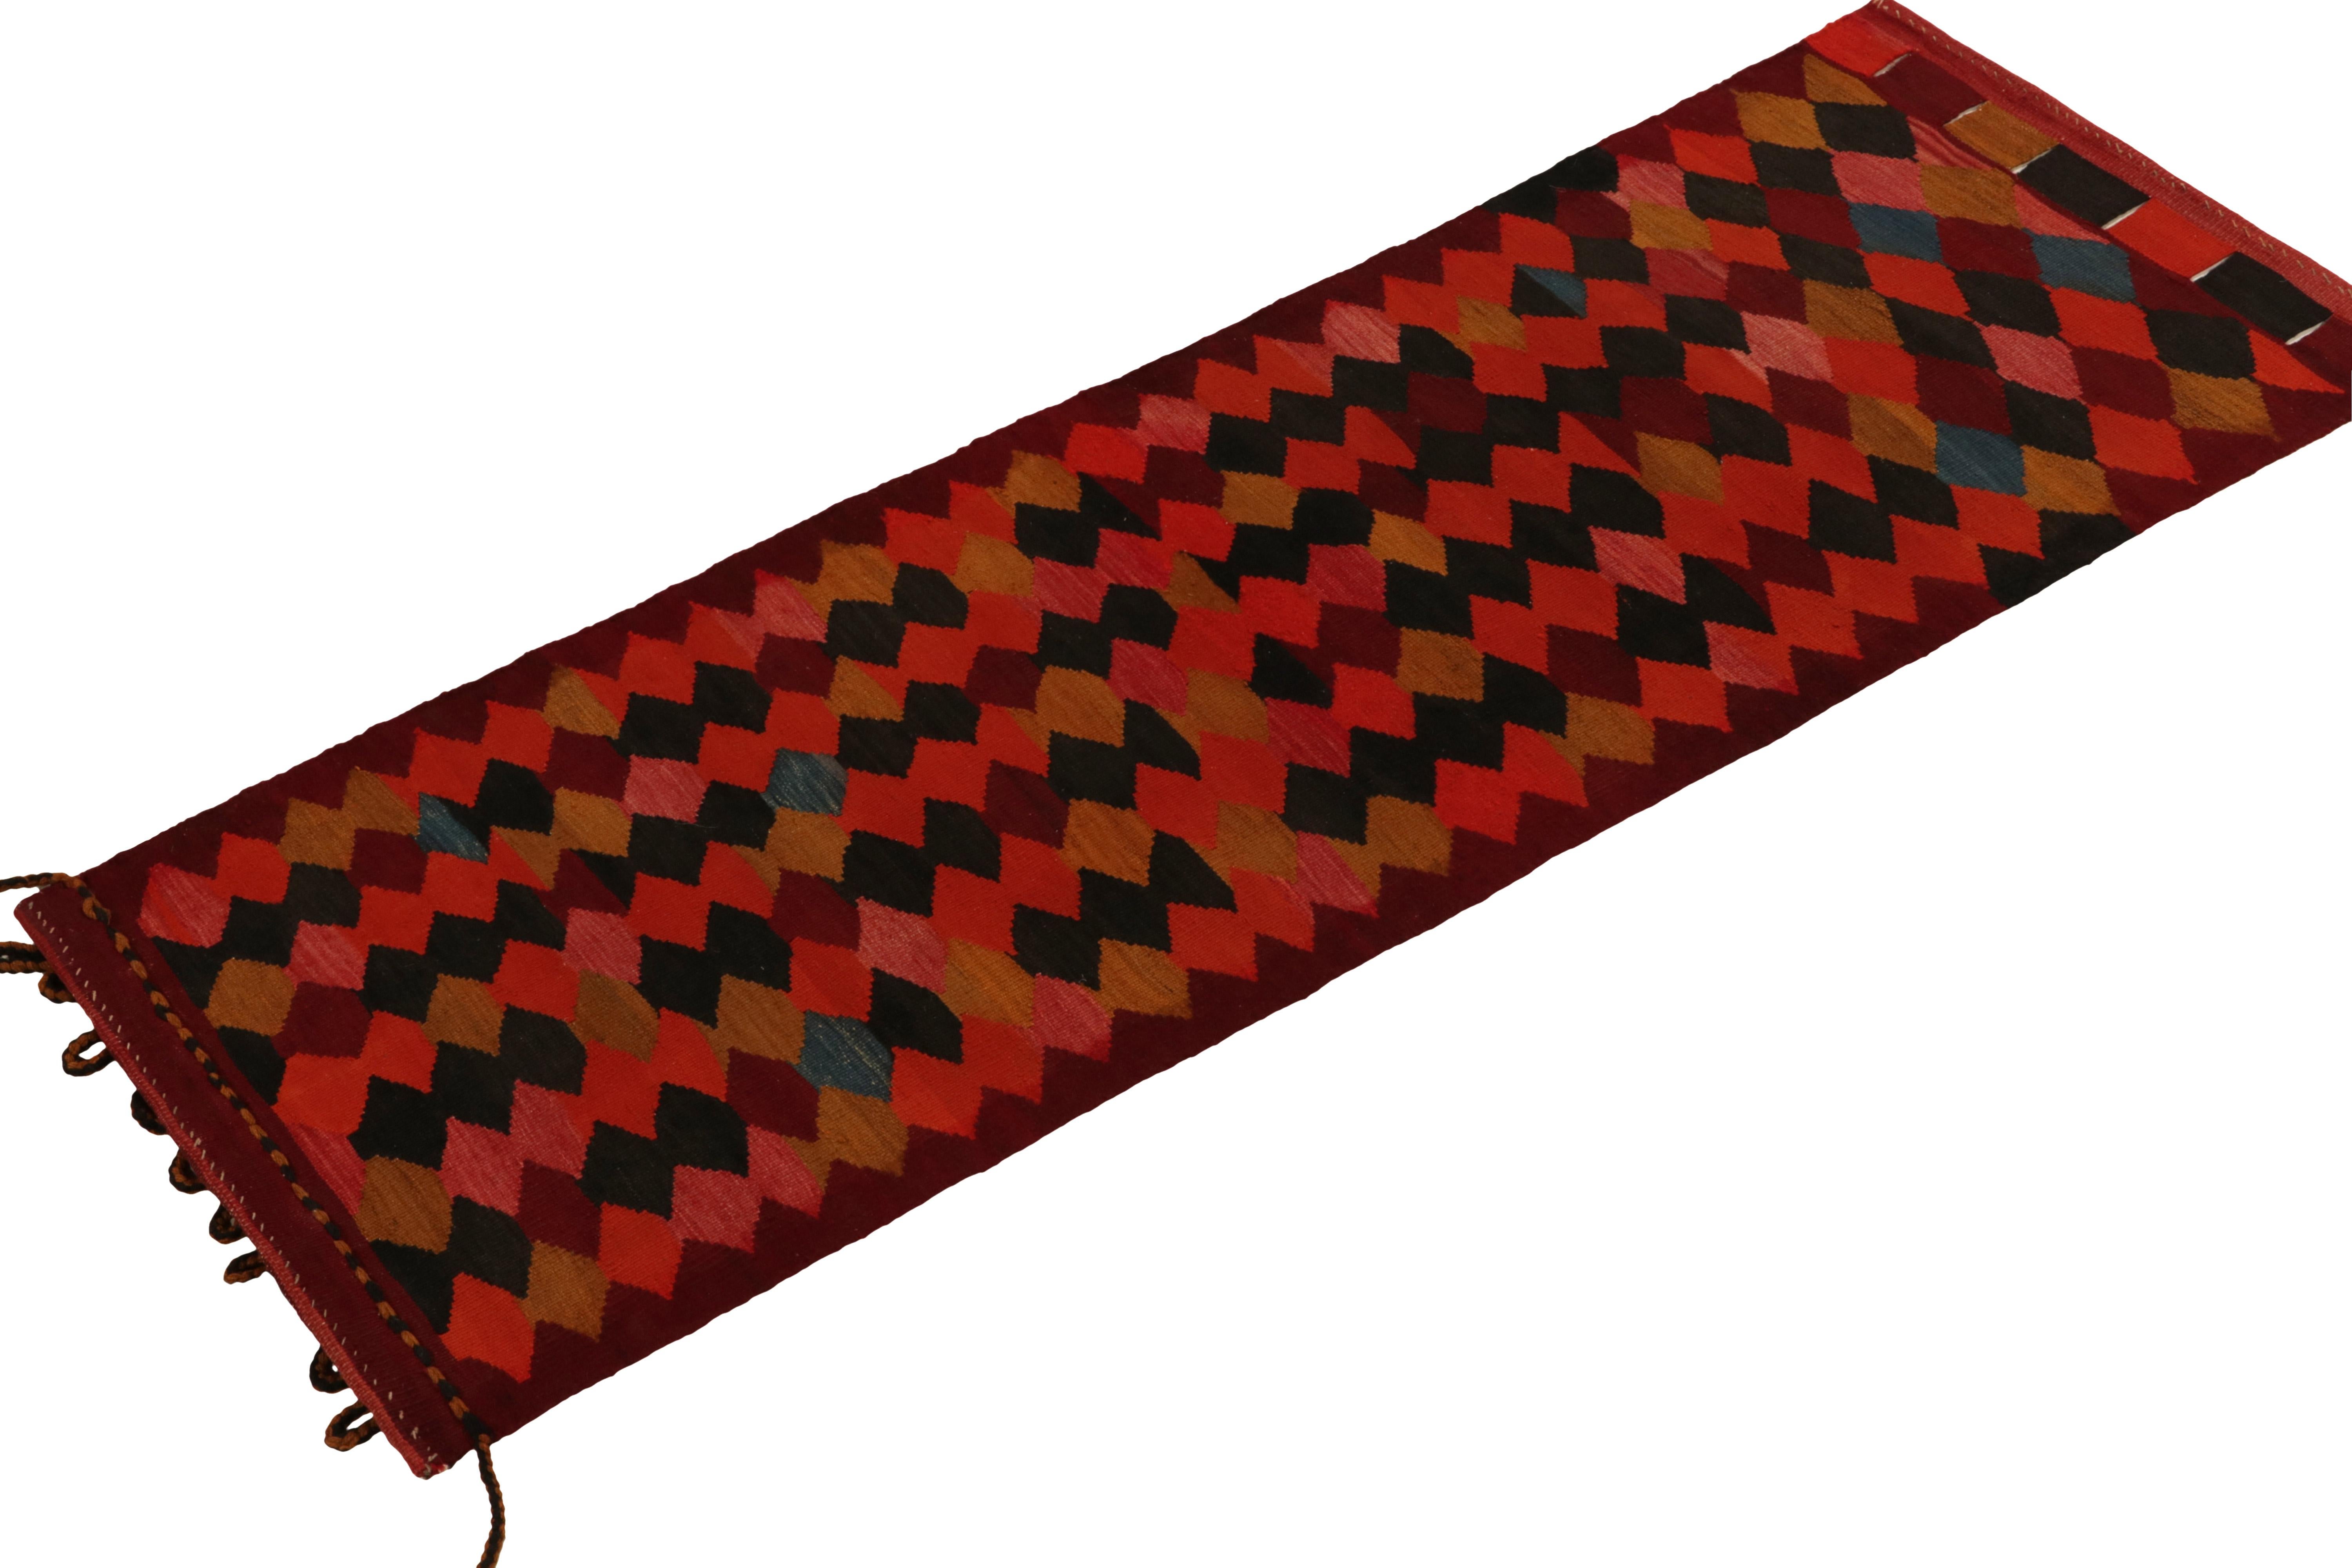 Tribal 1950s Vintage Kilim Runner in Red, Black Diamond Patterns by Rug & Kilim For Sale